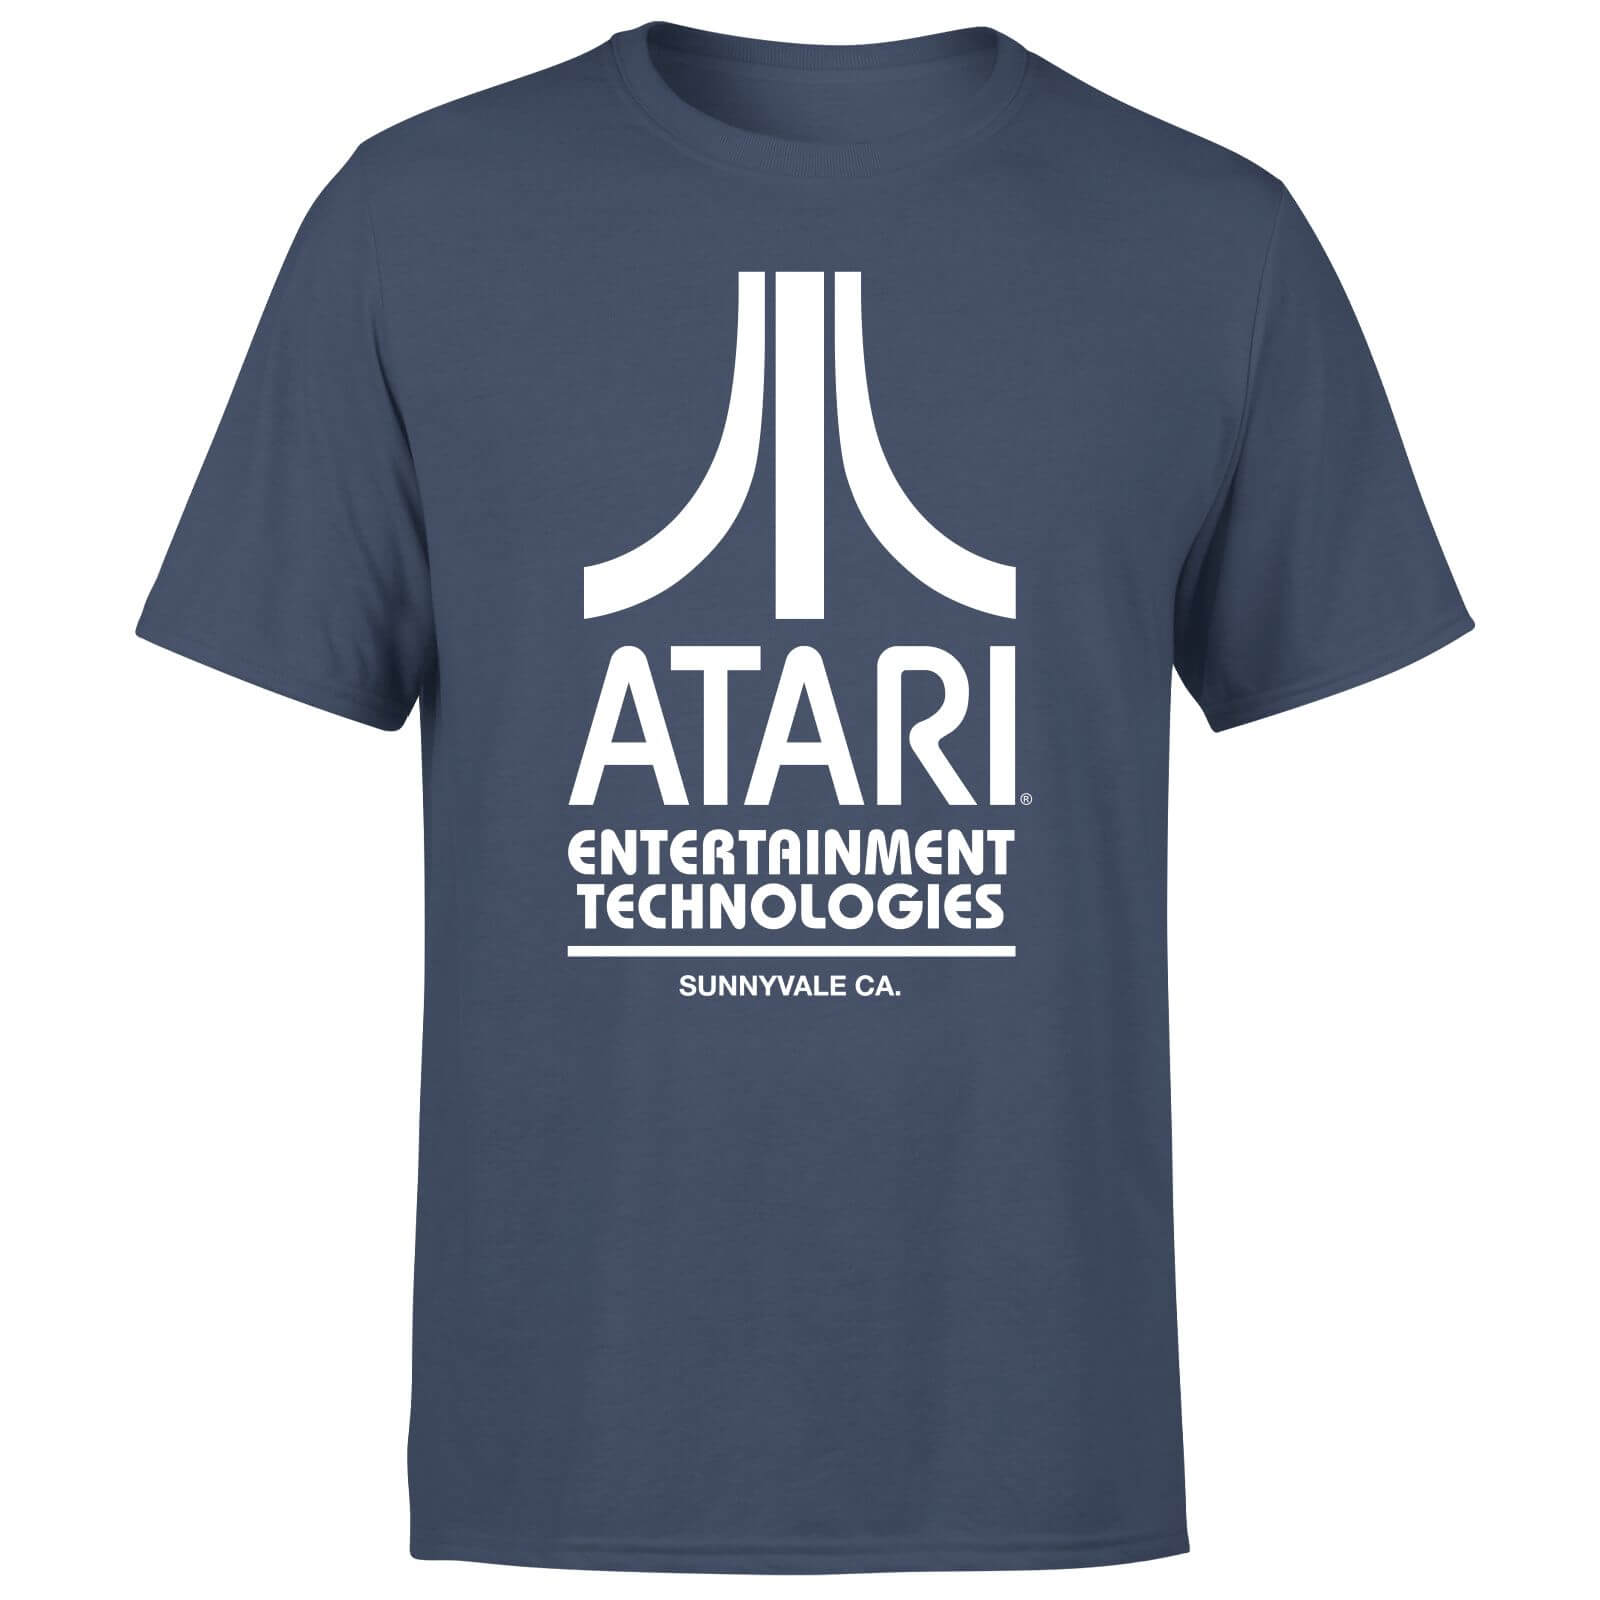 Atari Navy Tee Men's T-Shirt - Navy - S - Navy